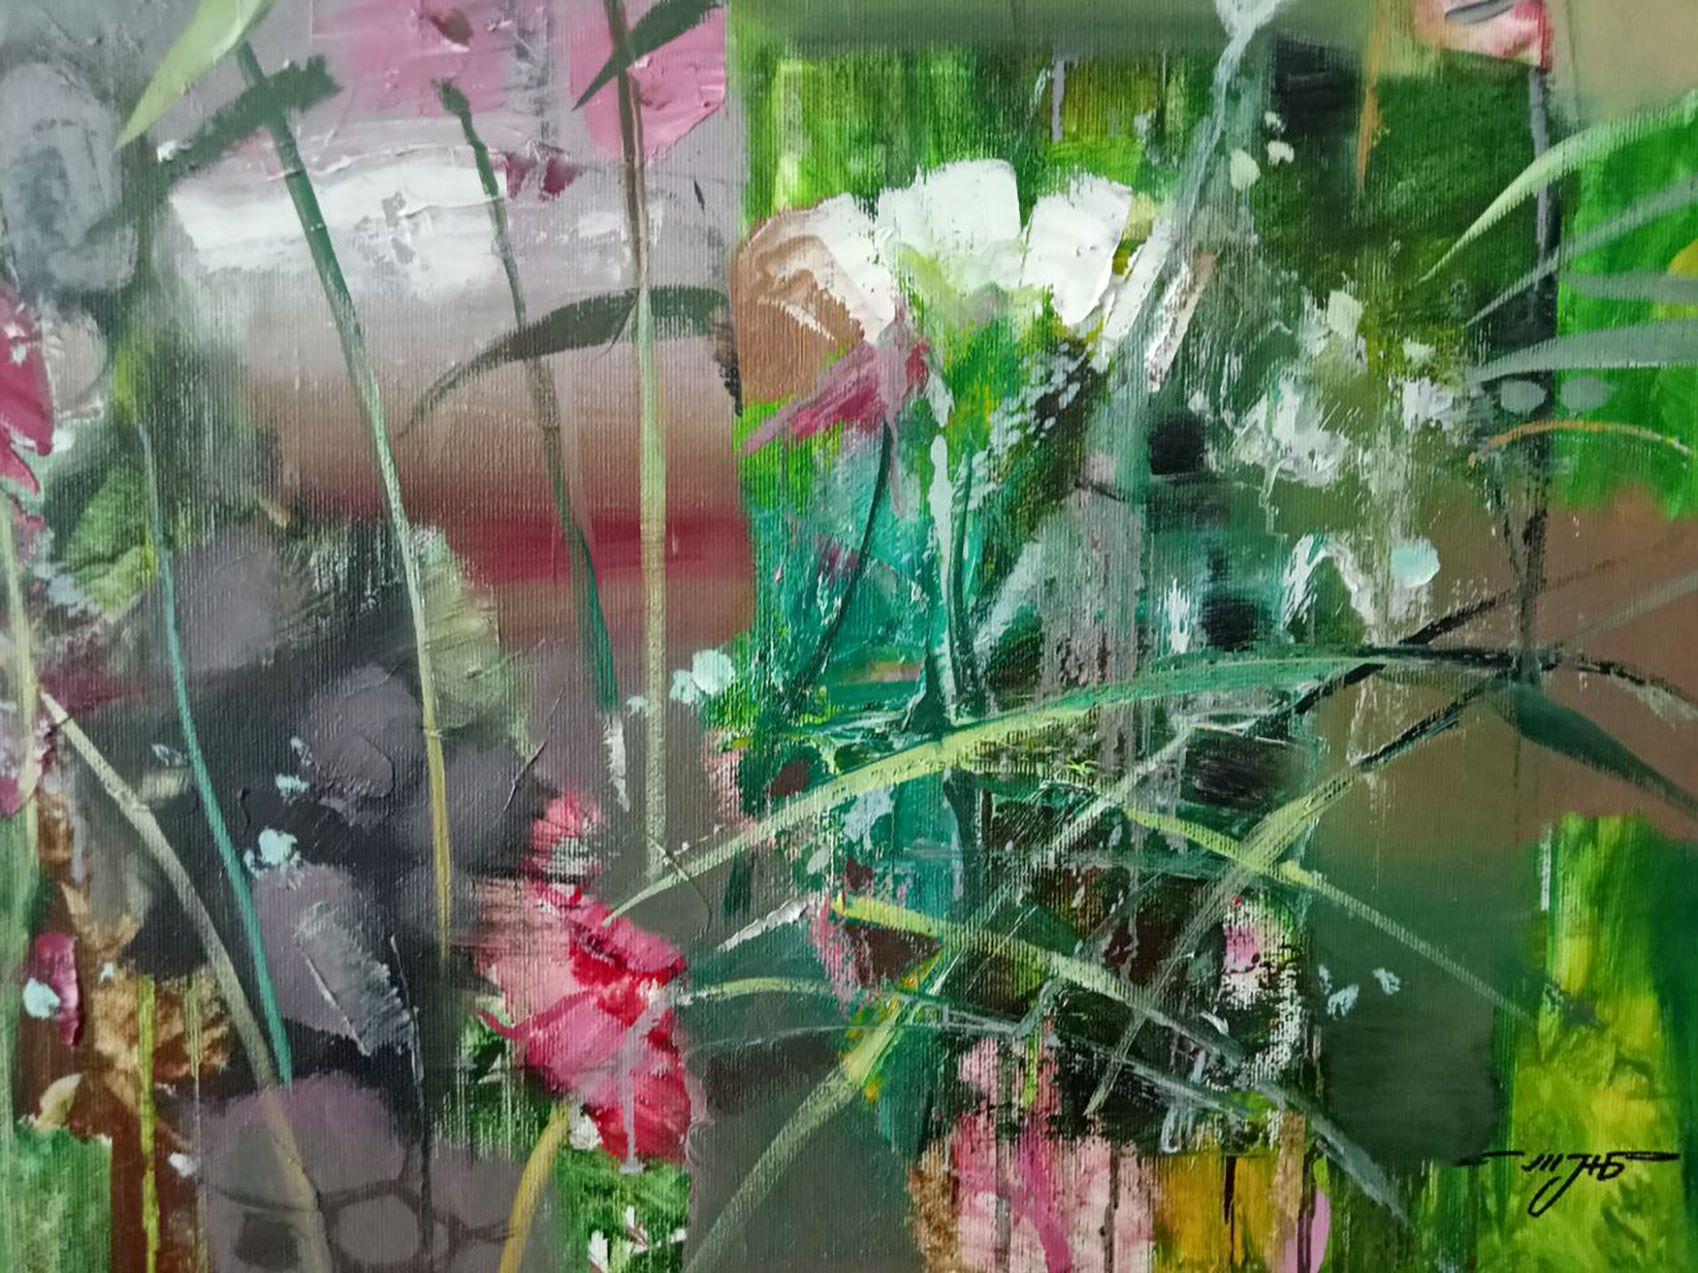 Artist: Anatoly Borisovich Tarabanov
Work: Original oil painting, handmade artwork, one of a kind 
Medium: Oil on Canvas 
Year: 2018
Style: Impressionism
Title: White Flowers
Size: 23.5